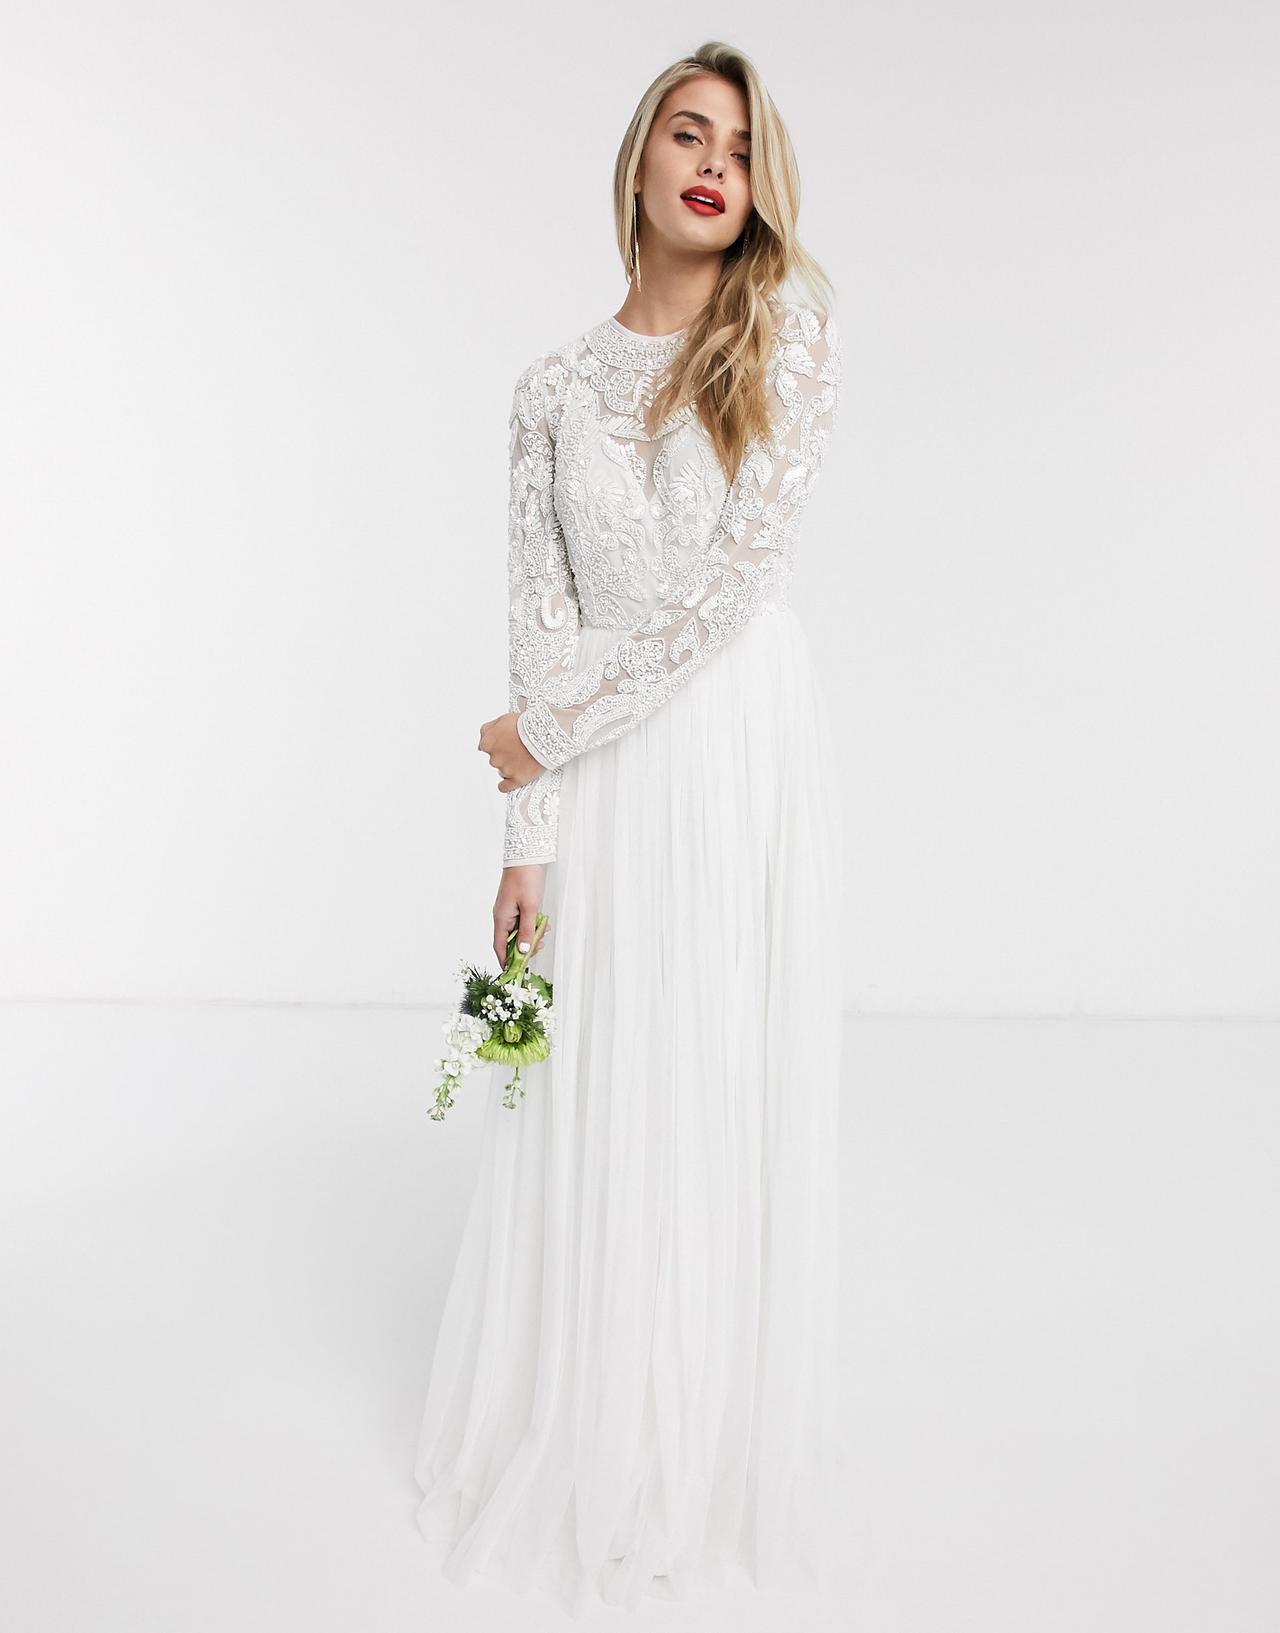 Model wearing an embellished long sleeved wedding dress